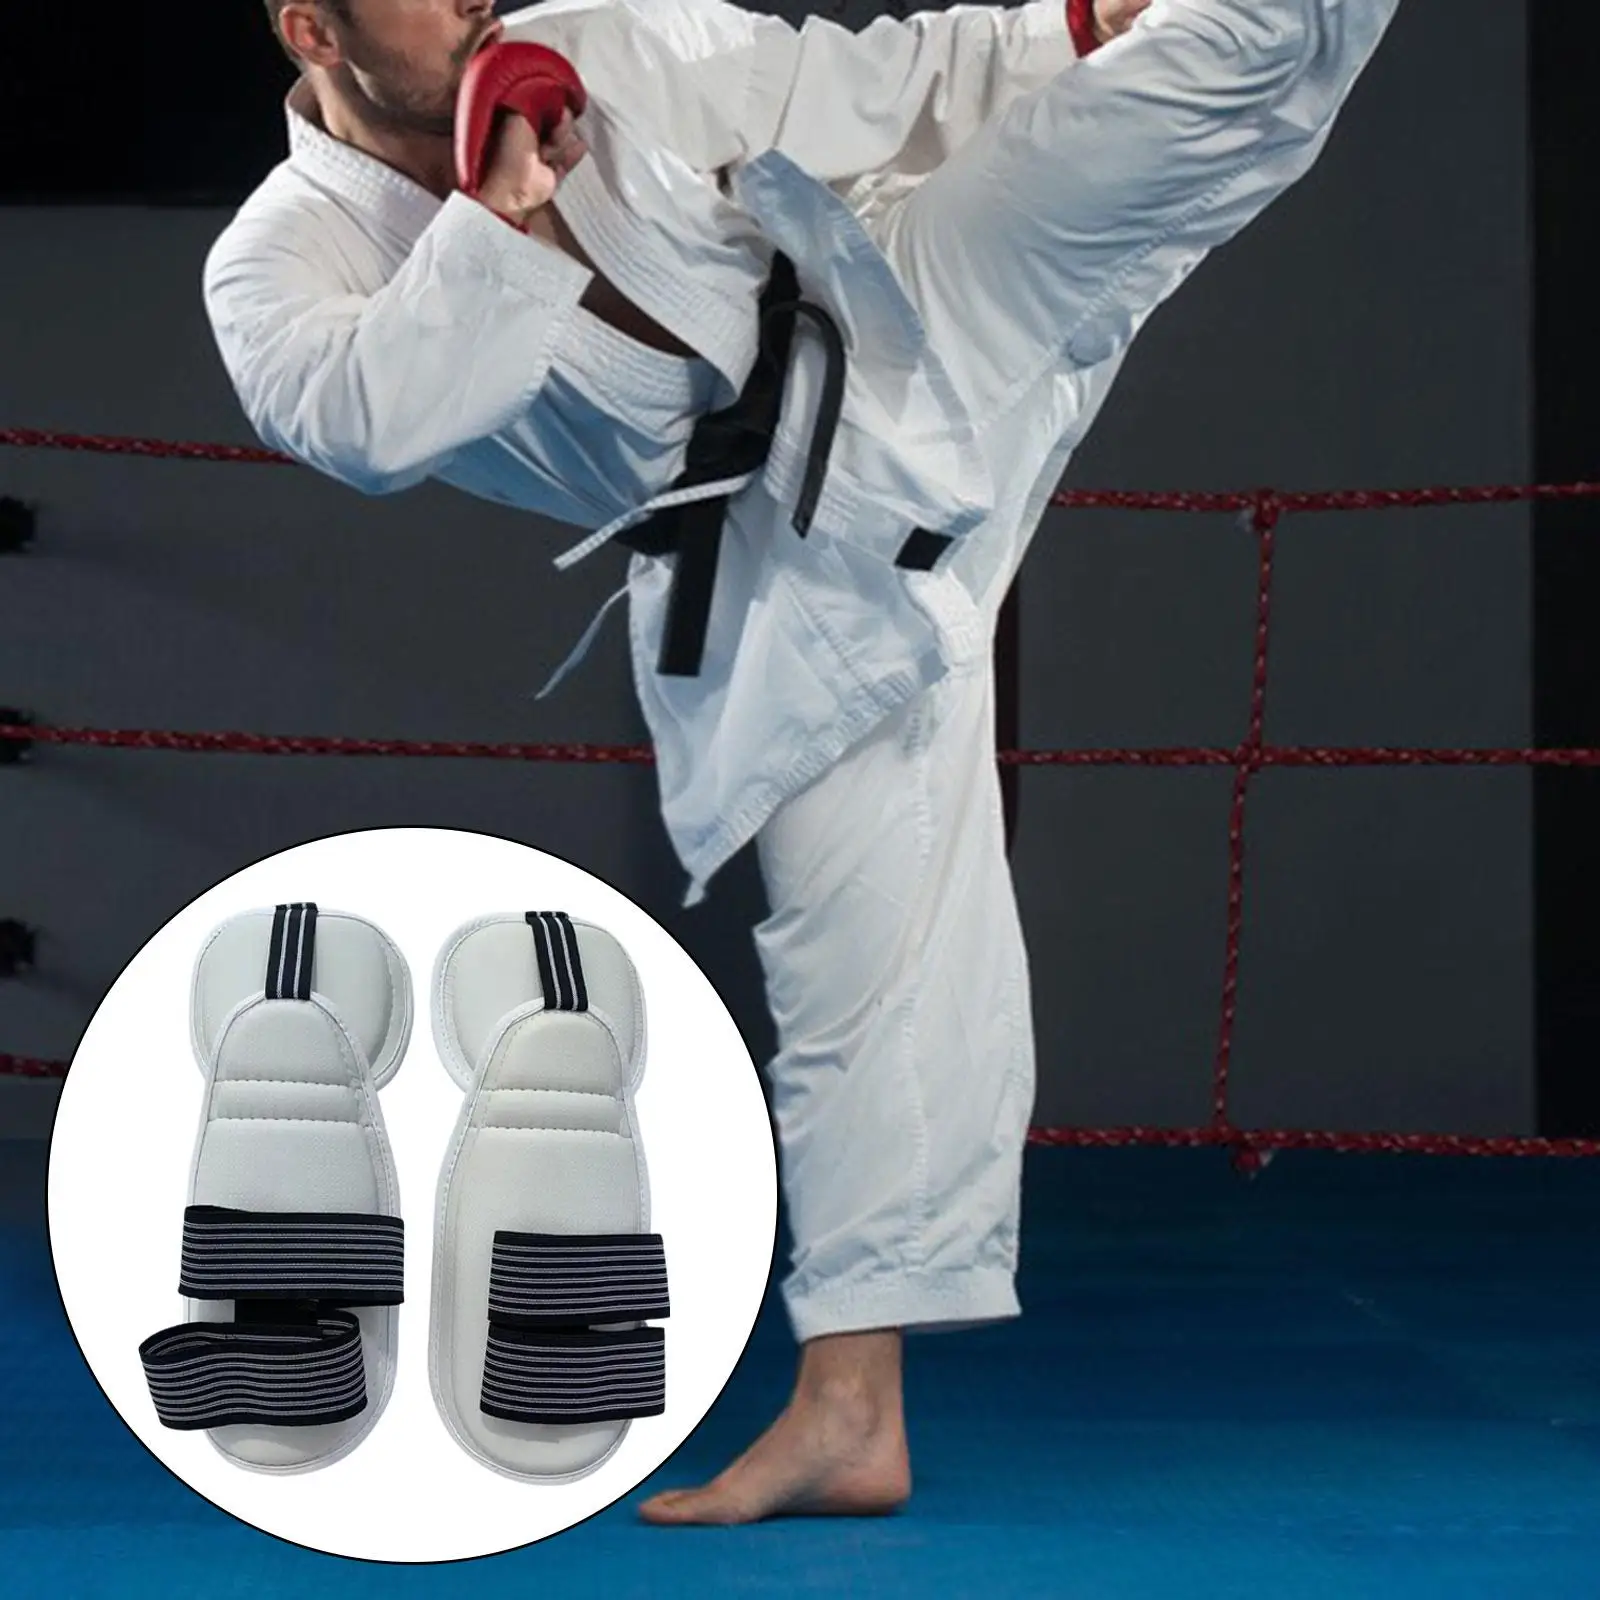 Taekwondo Forearm Guard Protectors Padded Mma Protective Gear